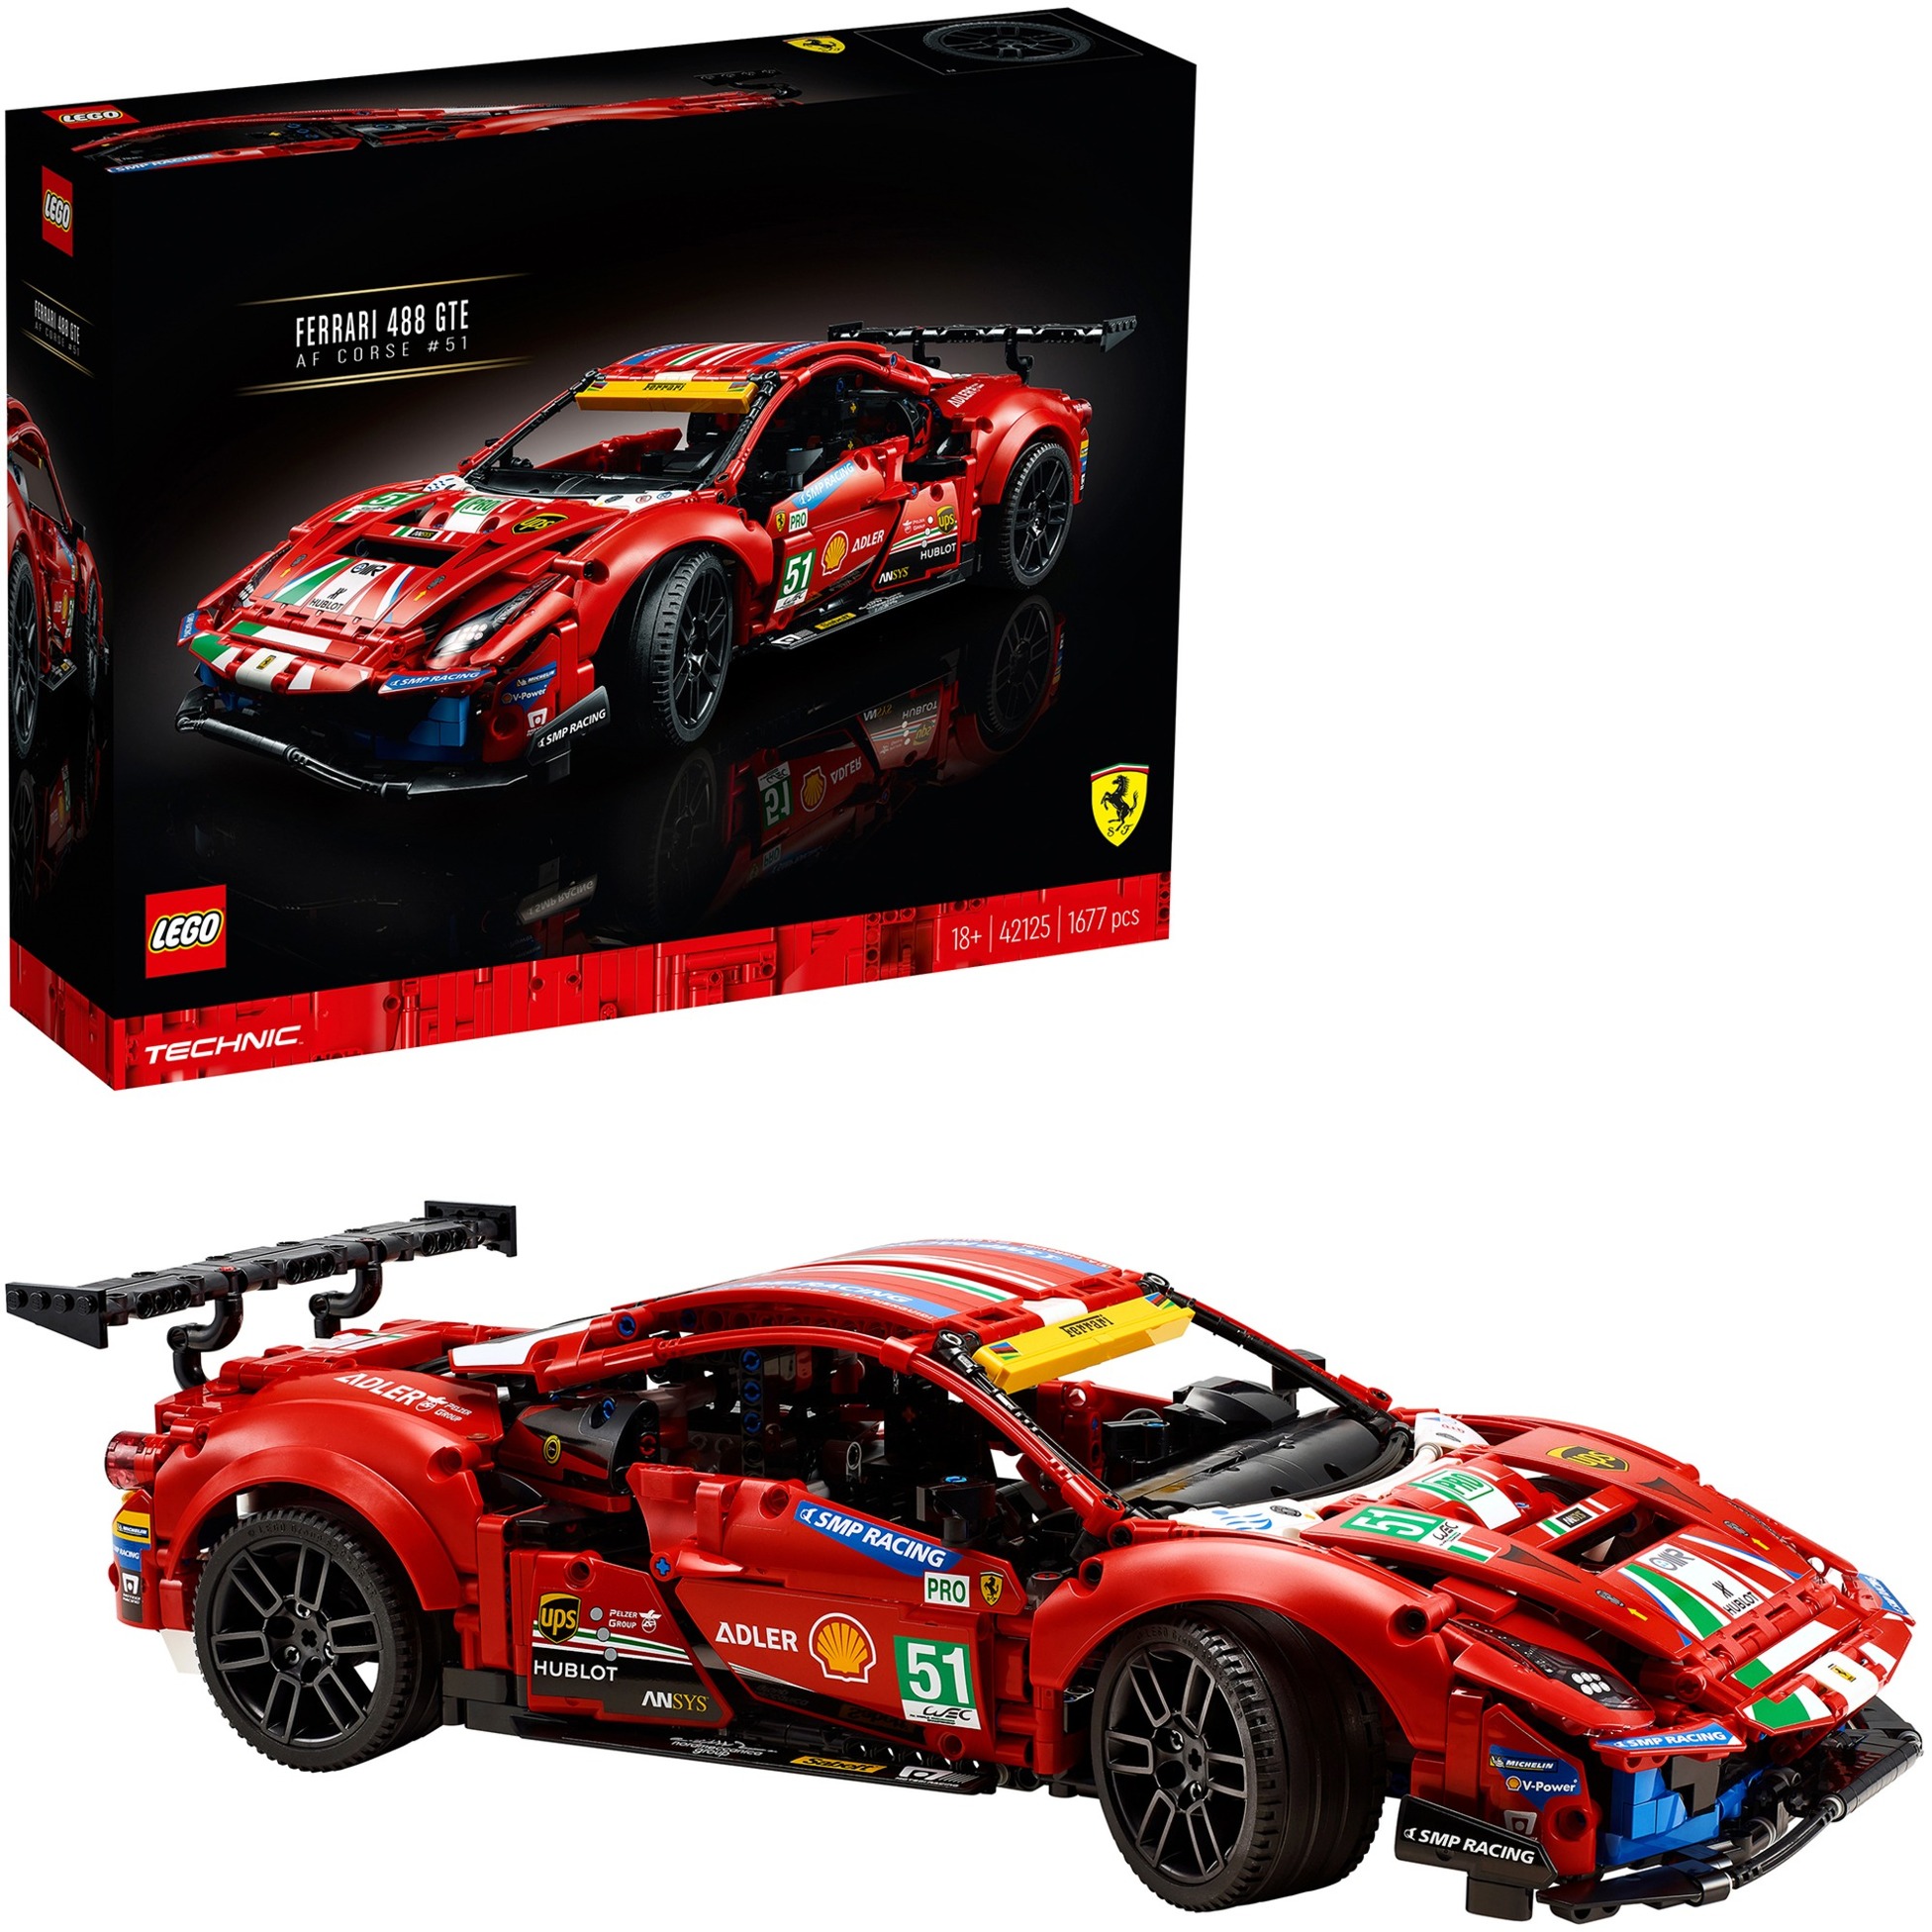 Spielzeug: Lego 42125 Technic Ferrari 488 GTE 